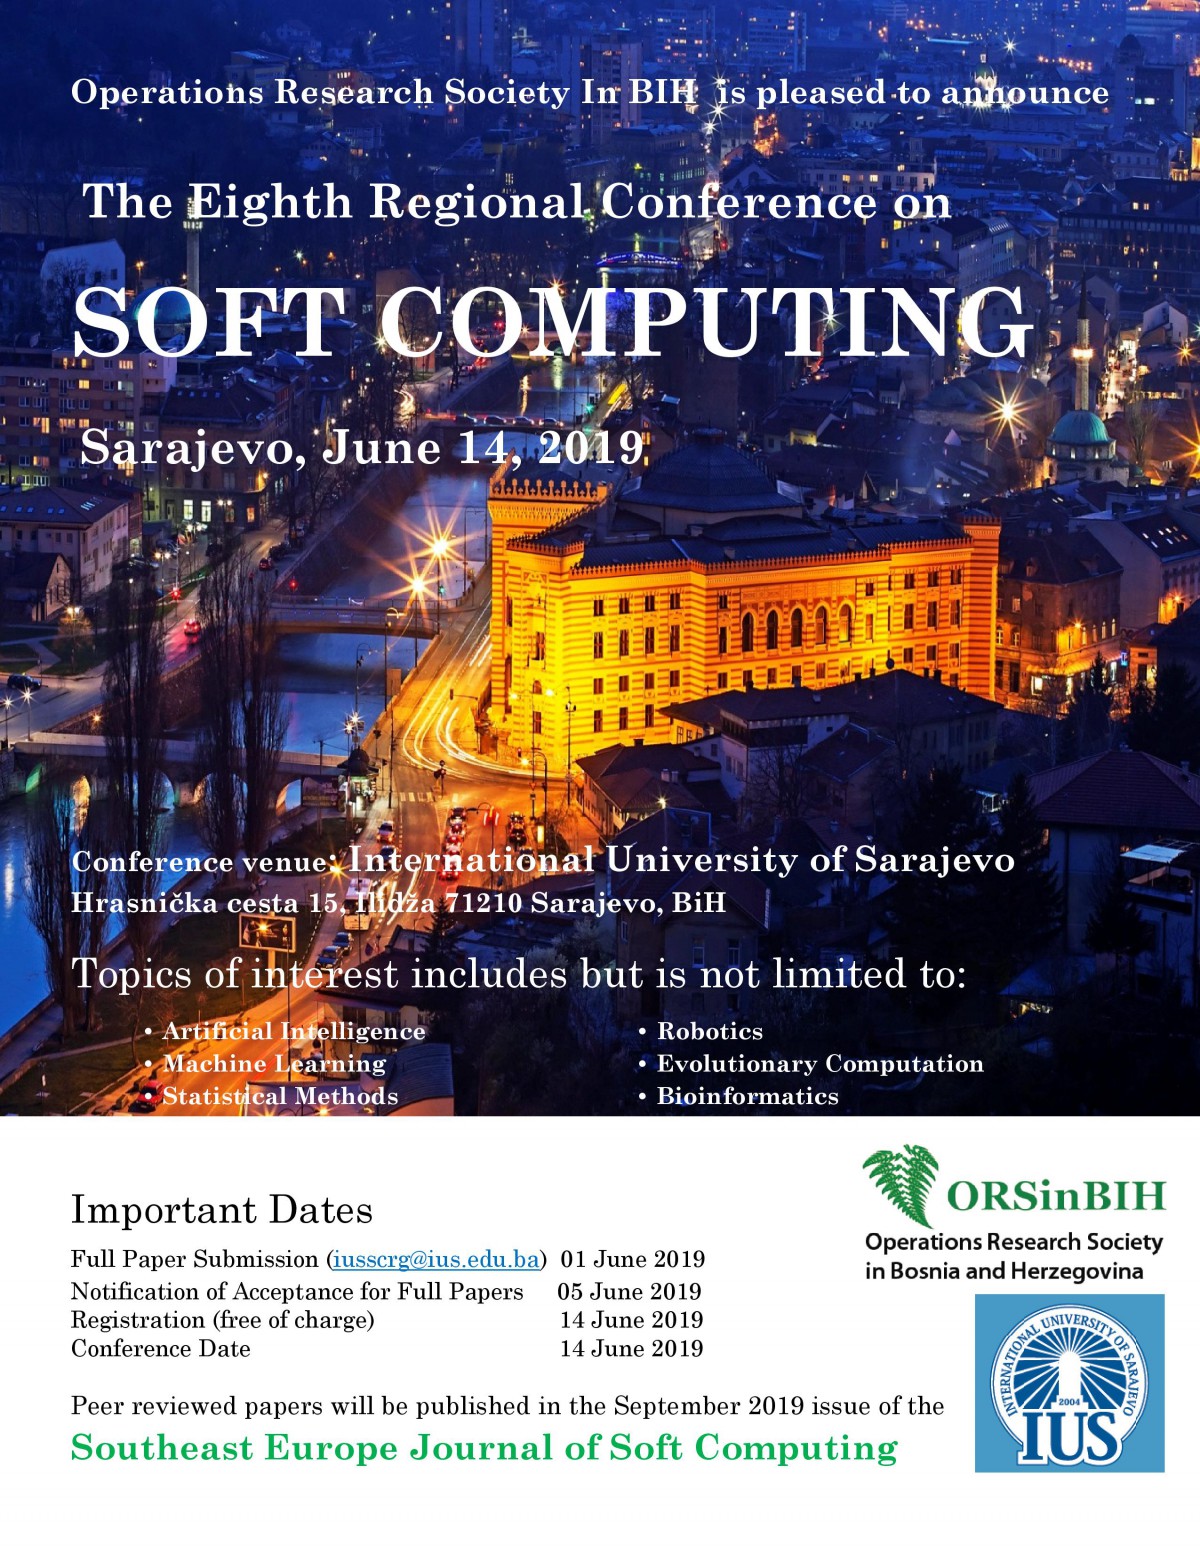  The Eighth Regional Conference on SOFT COMPUTING, Sarajevo, June 14, 2019 